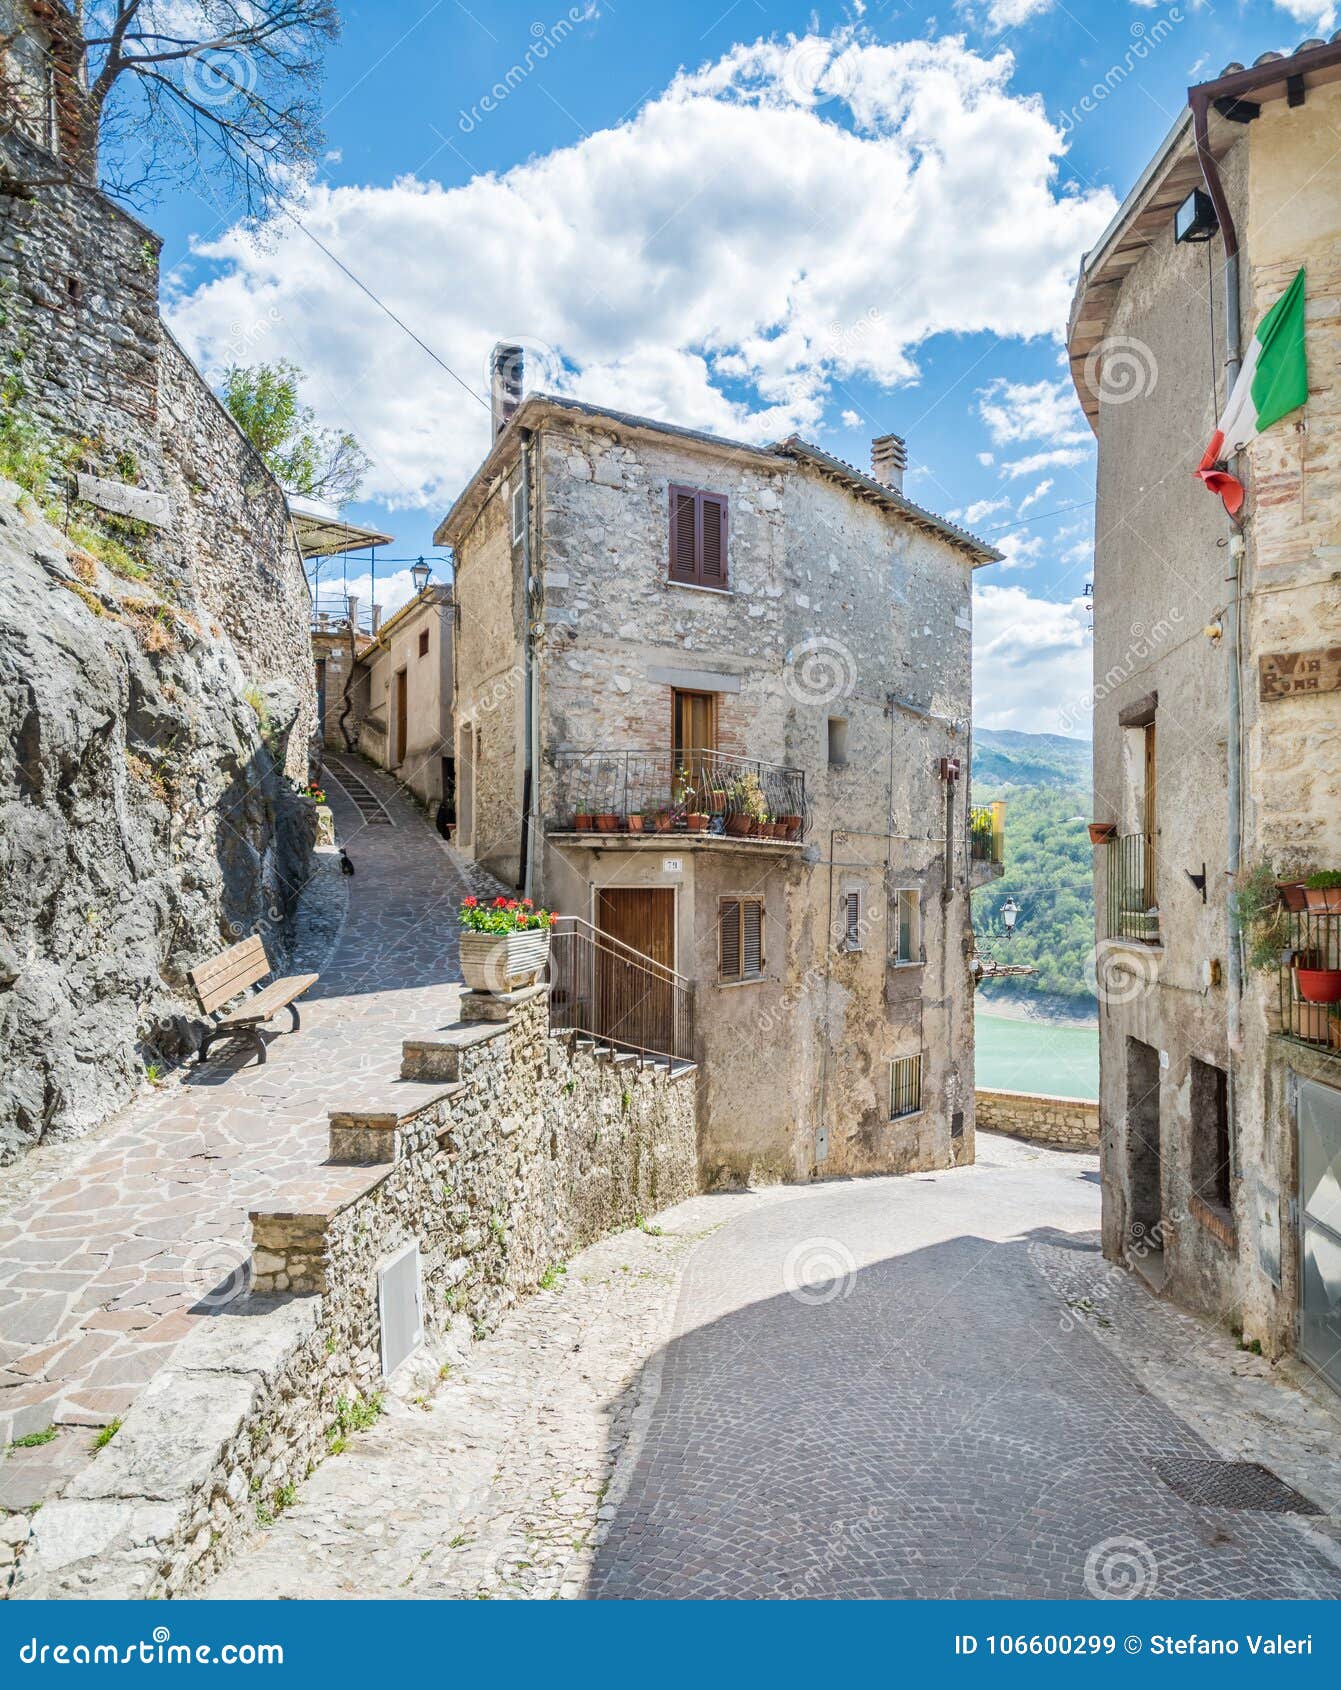 castel di tora, comune in the province of rieti in the italian region latium.